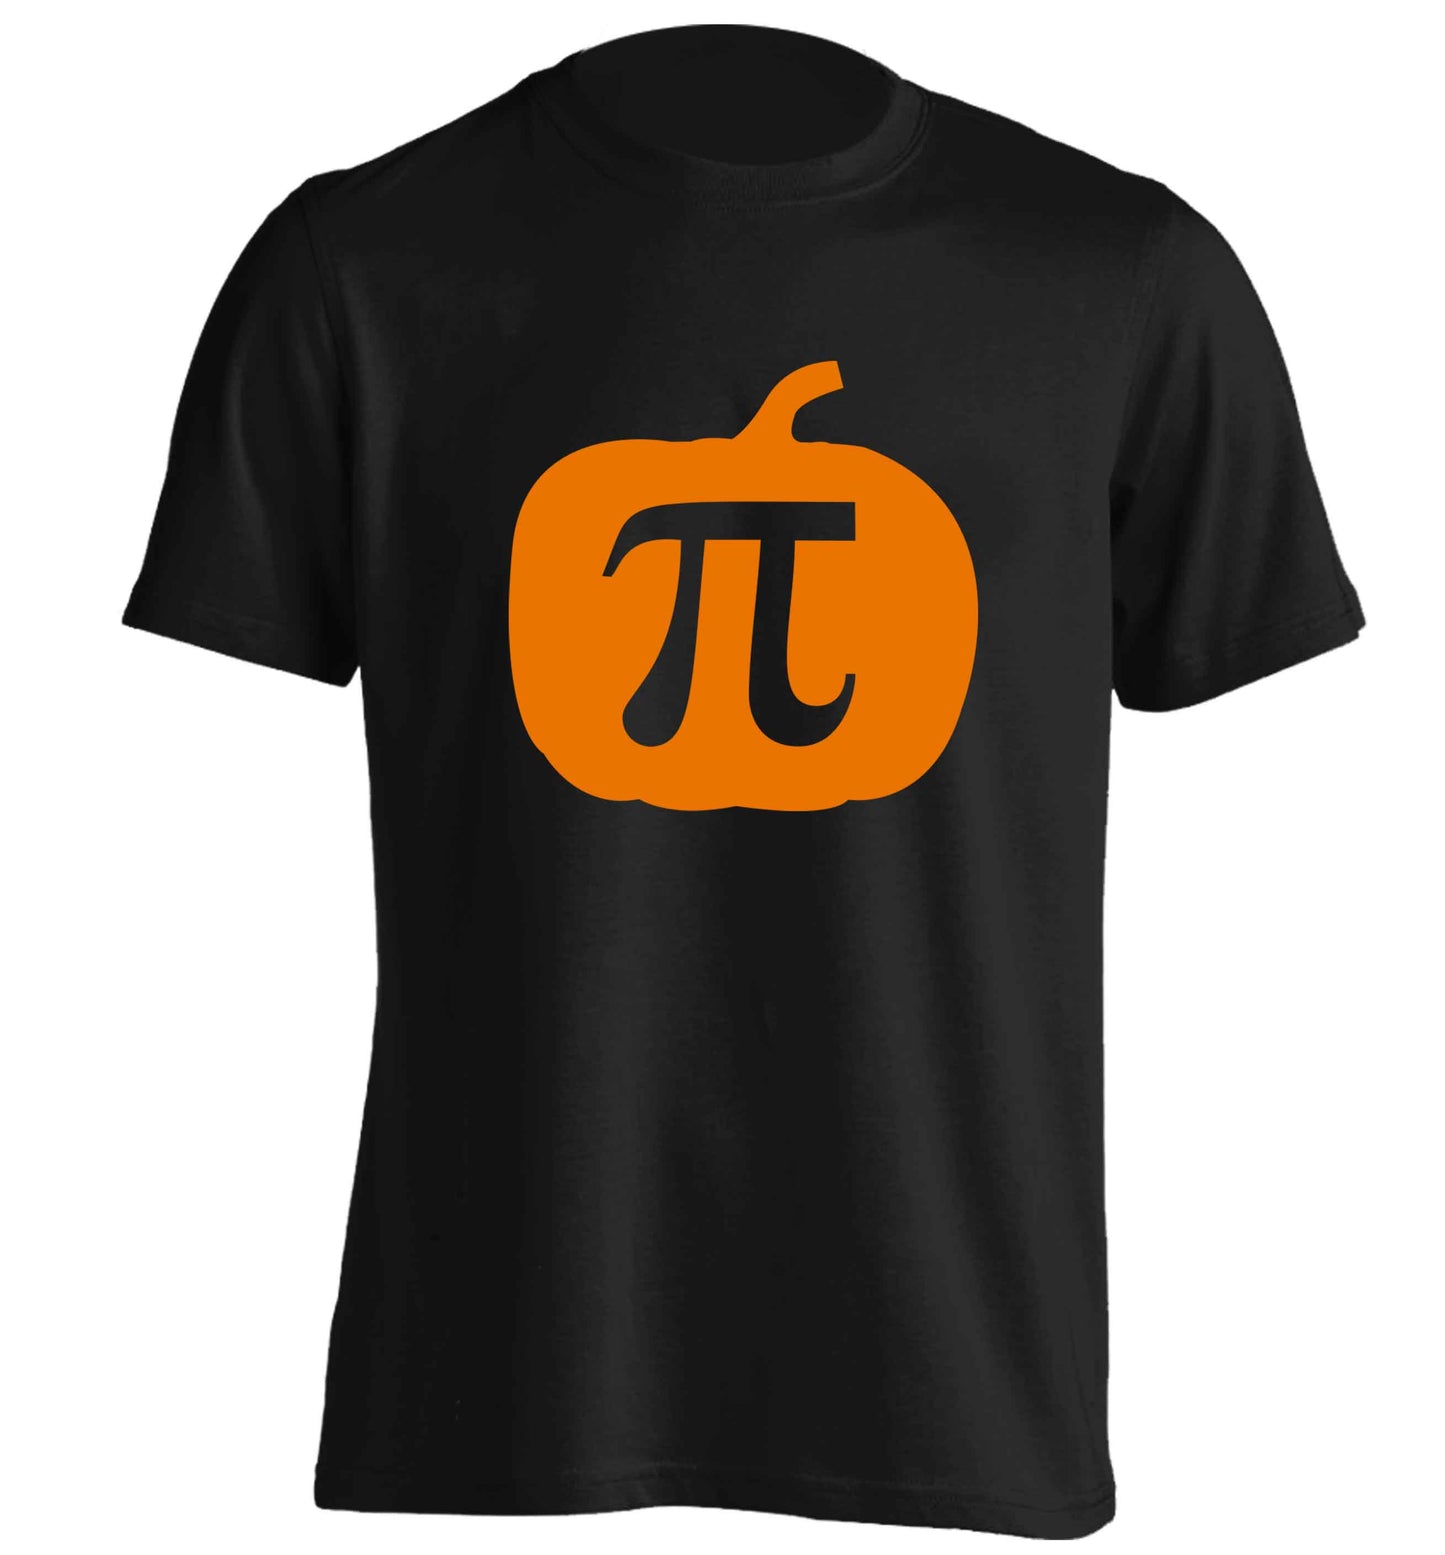 Pumpkin Pie adults unisex black Tshirt 2XL